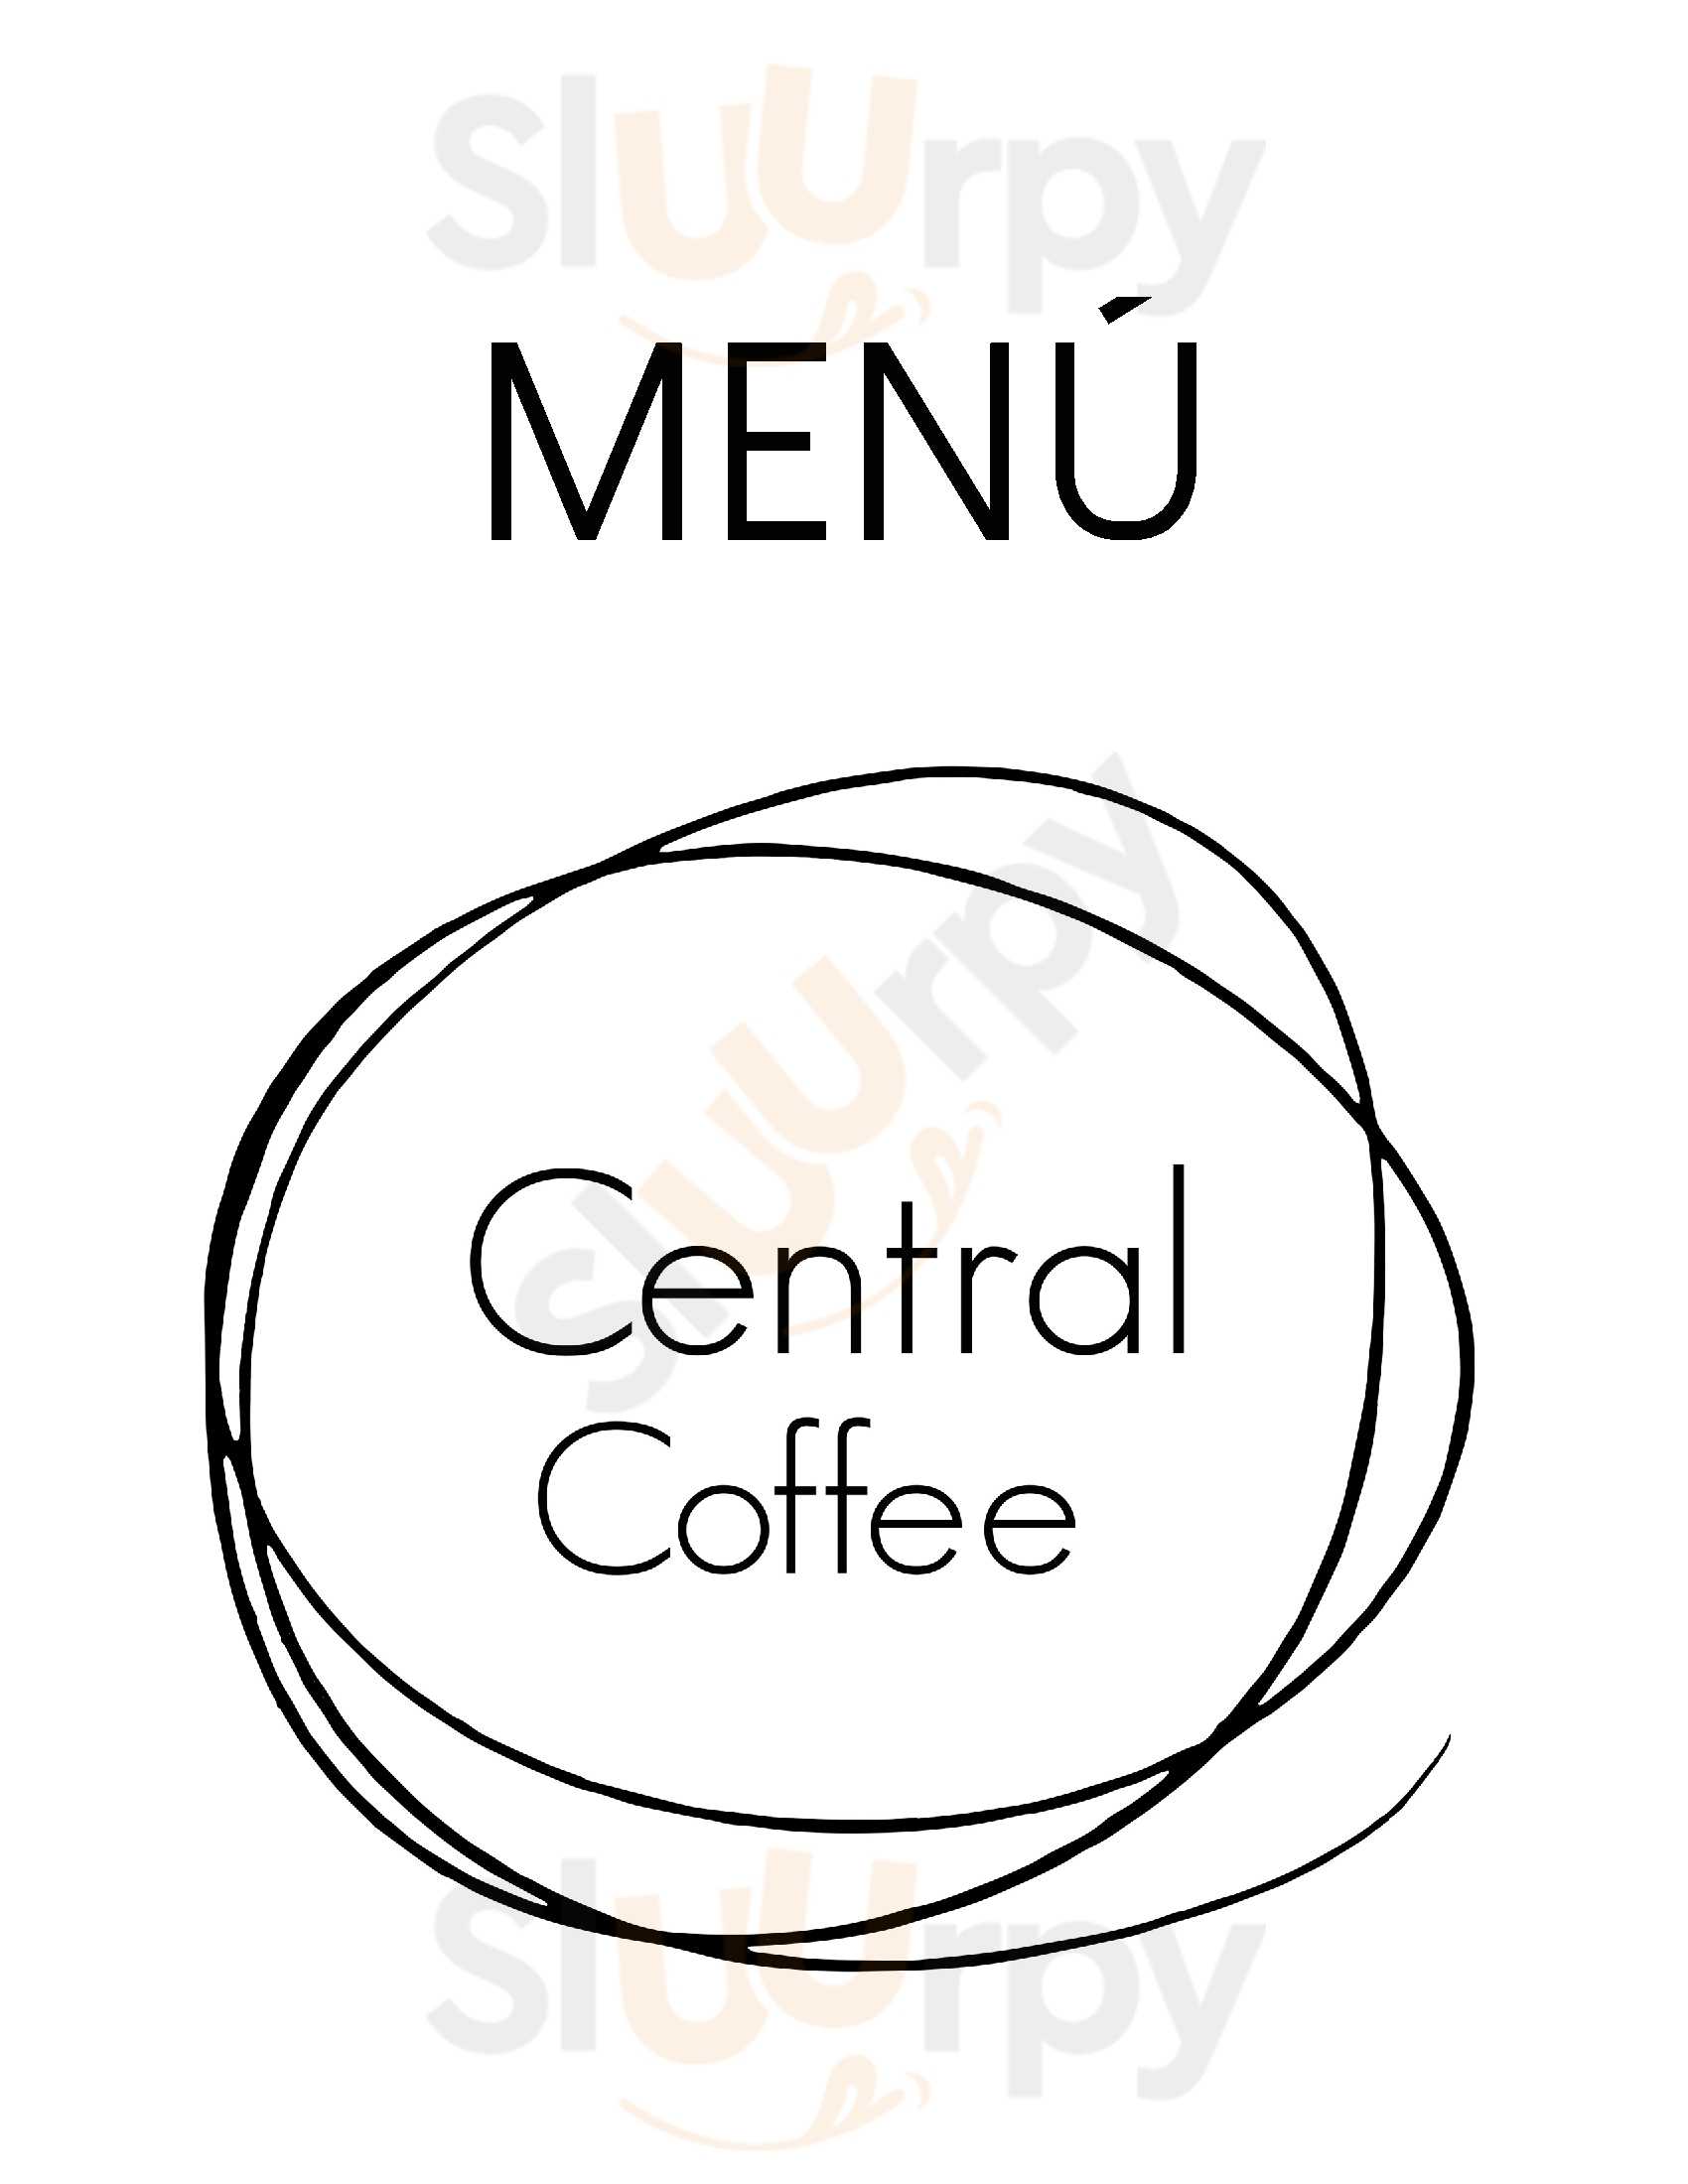 Central Coffee Toluca Menu - 1